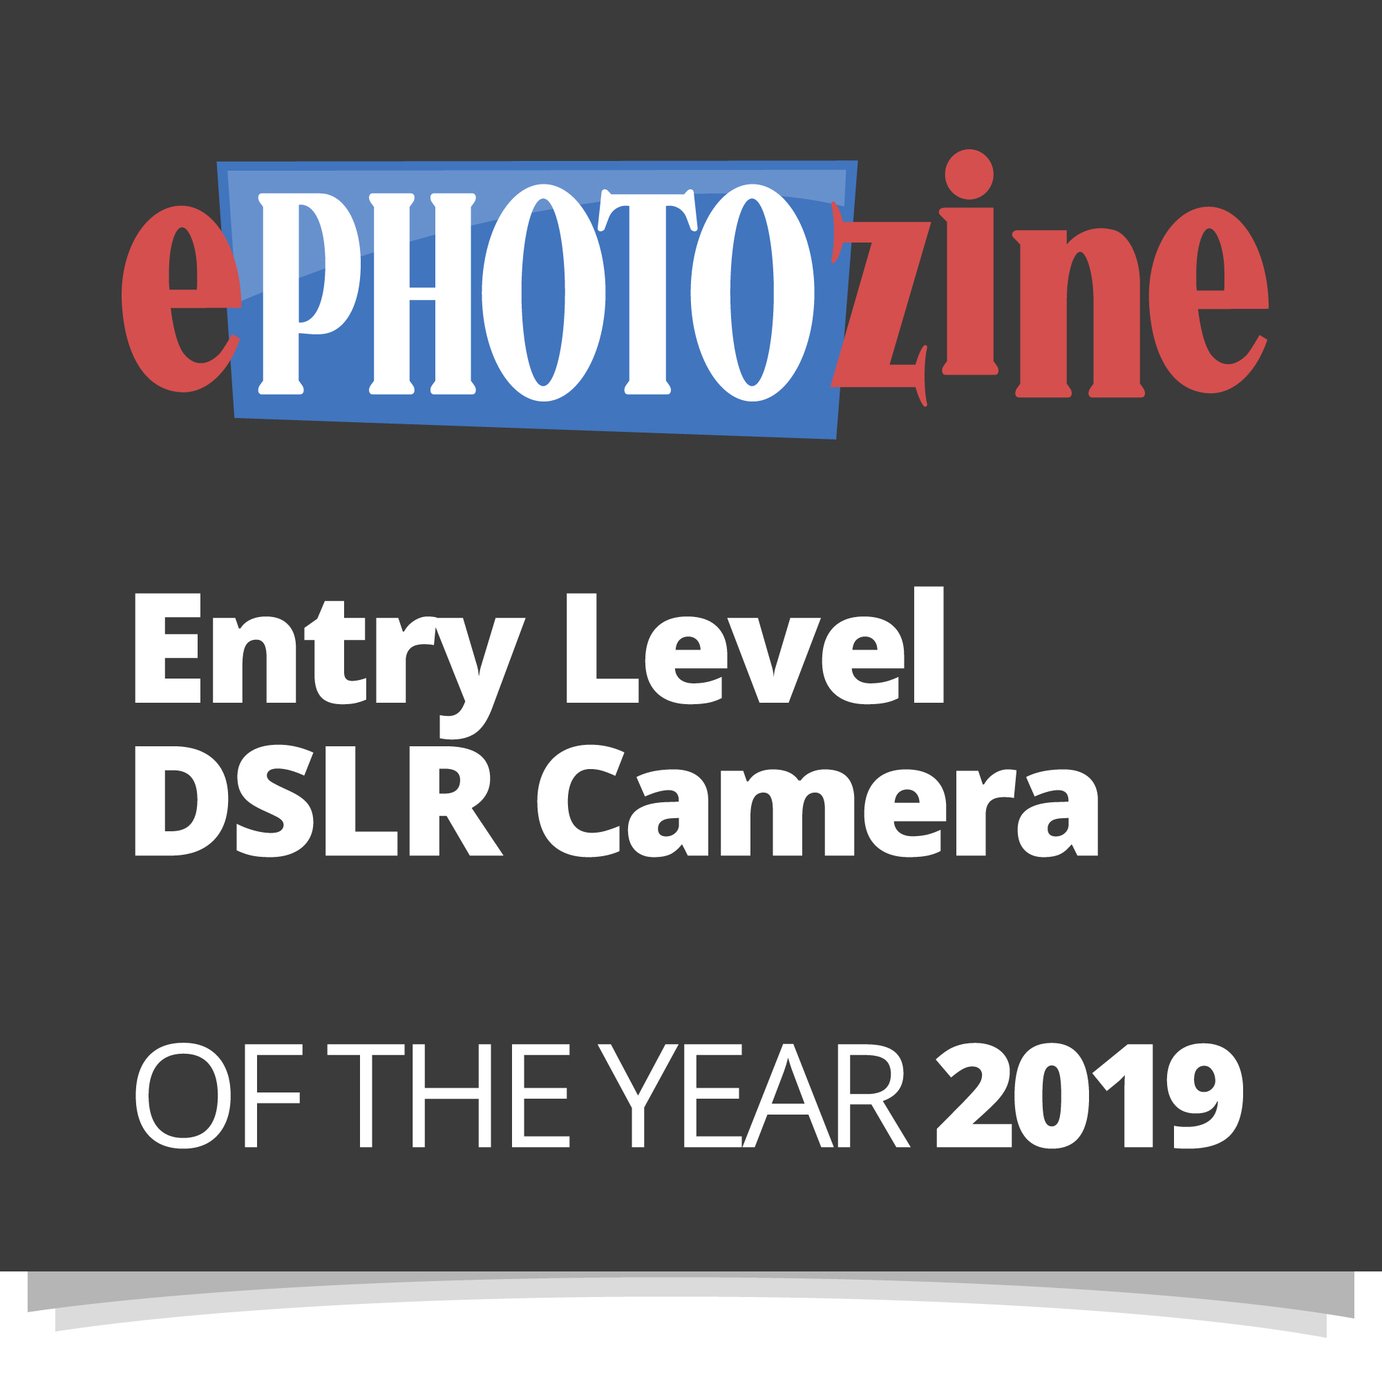 Canon EOS 250D DSLR Camera Body with 18-55mm DC Lens Bundle Review